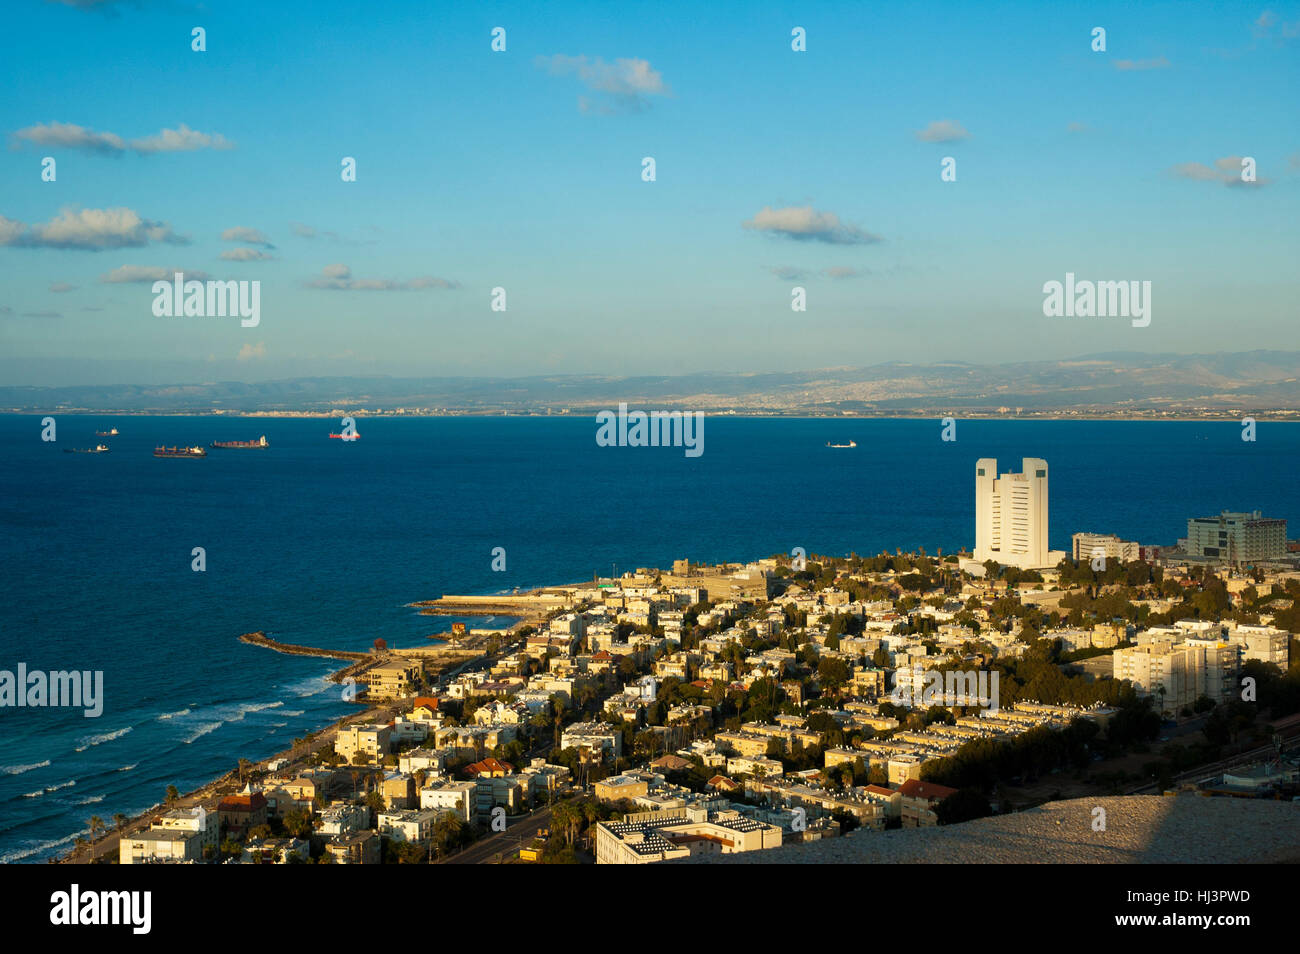 Israel landscape, urban,Haifa, port Stock Photo